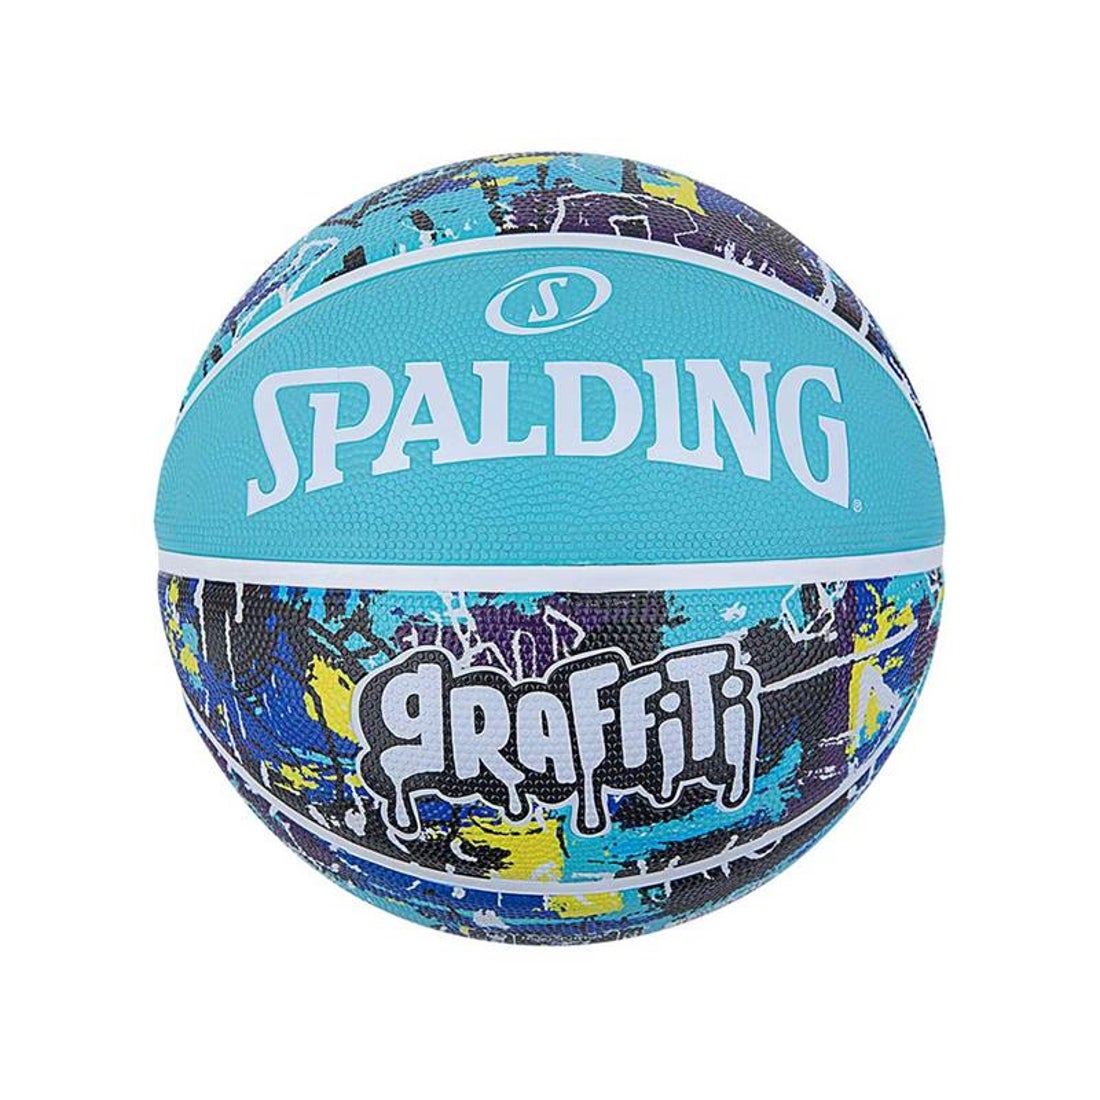 SPALDING スポルディング グラフィティ ブルー 6号球(ブルー) 84-529J ボール -【SWSバスケットボール】